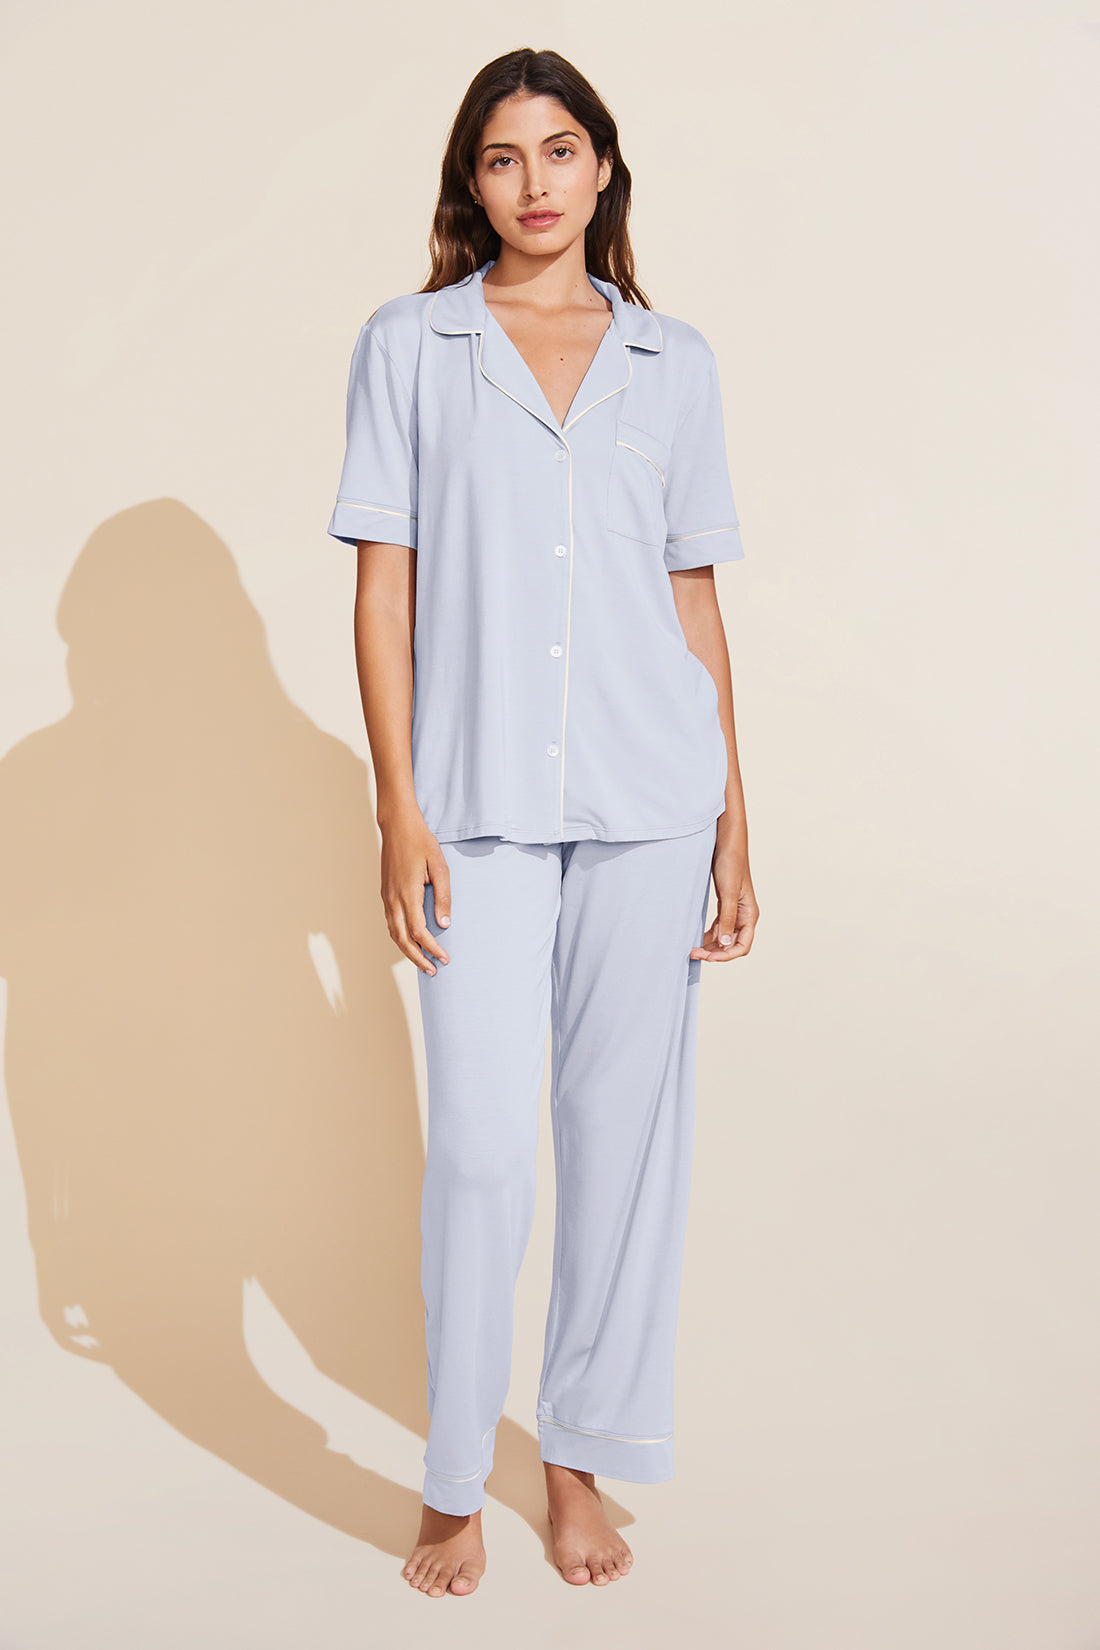 Shop Women's Pajama Tops - Soma